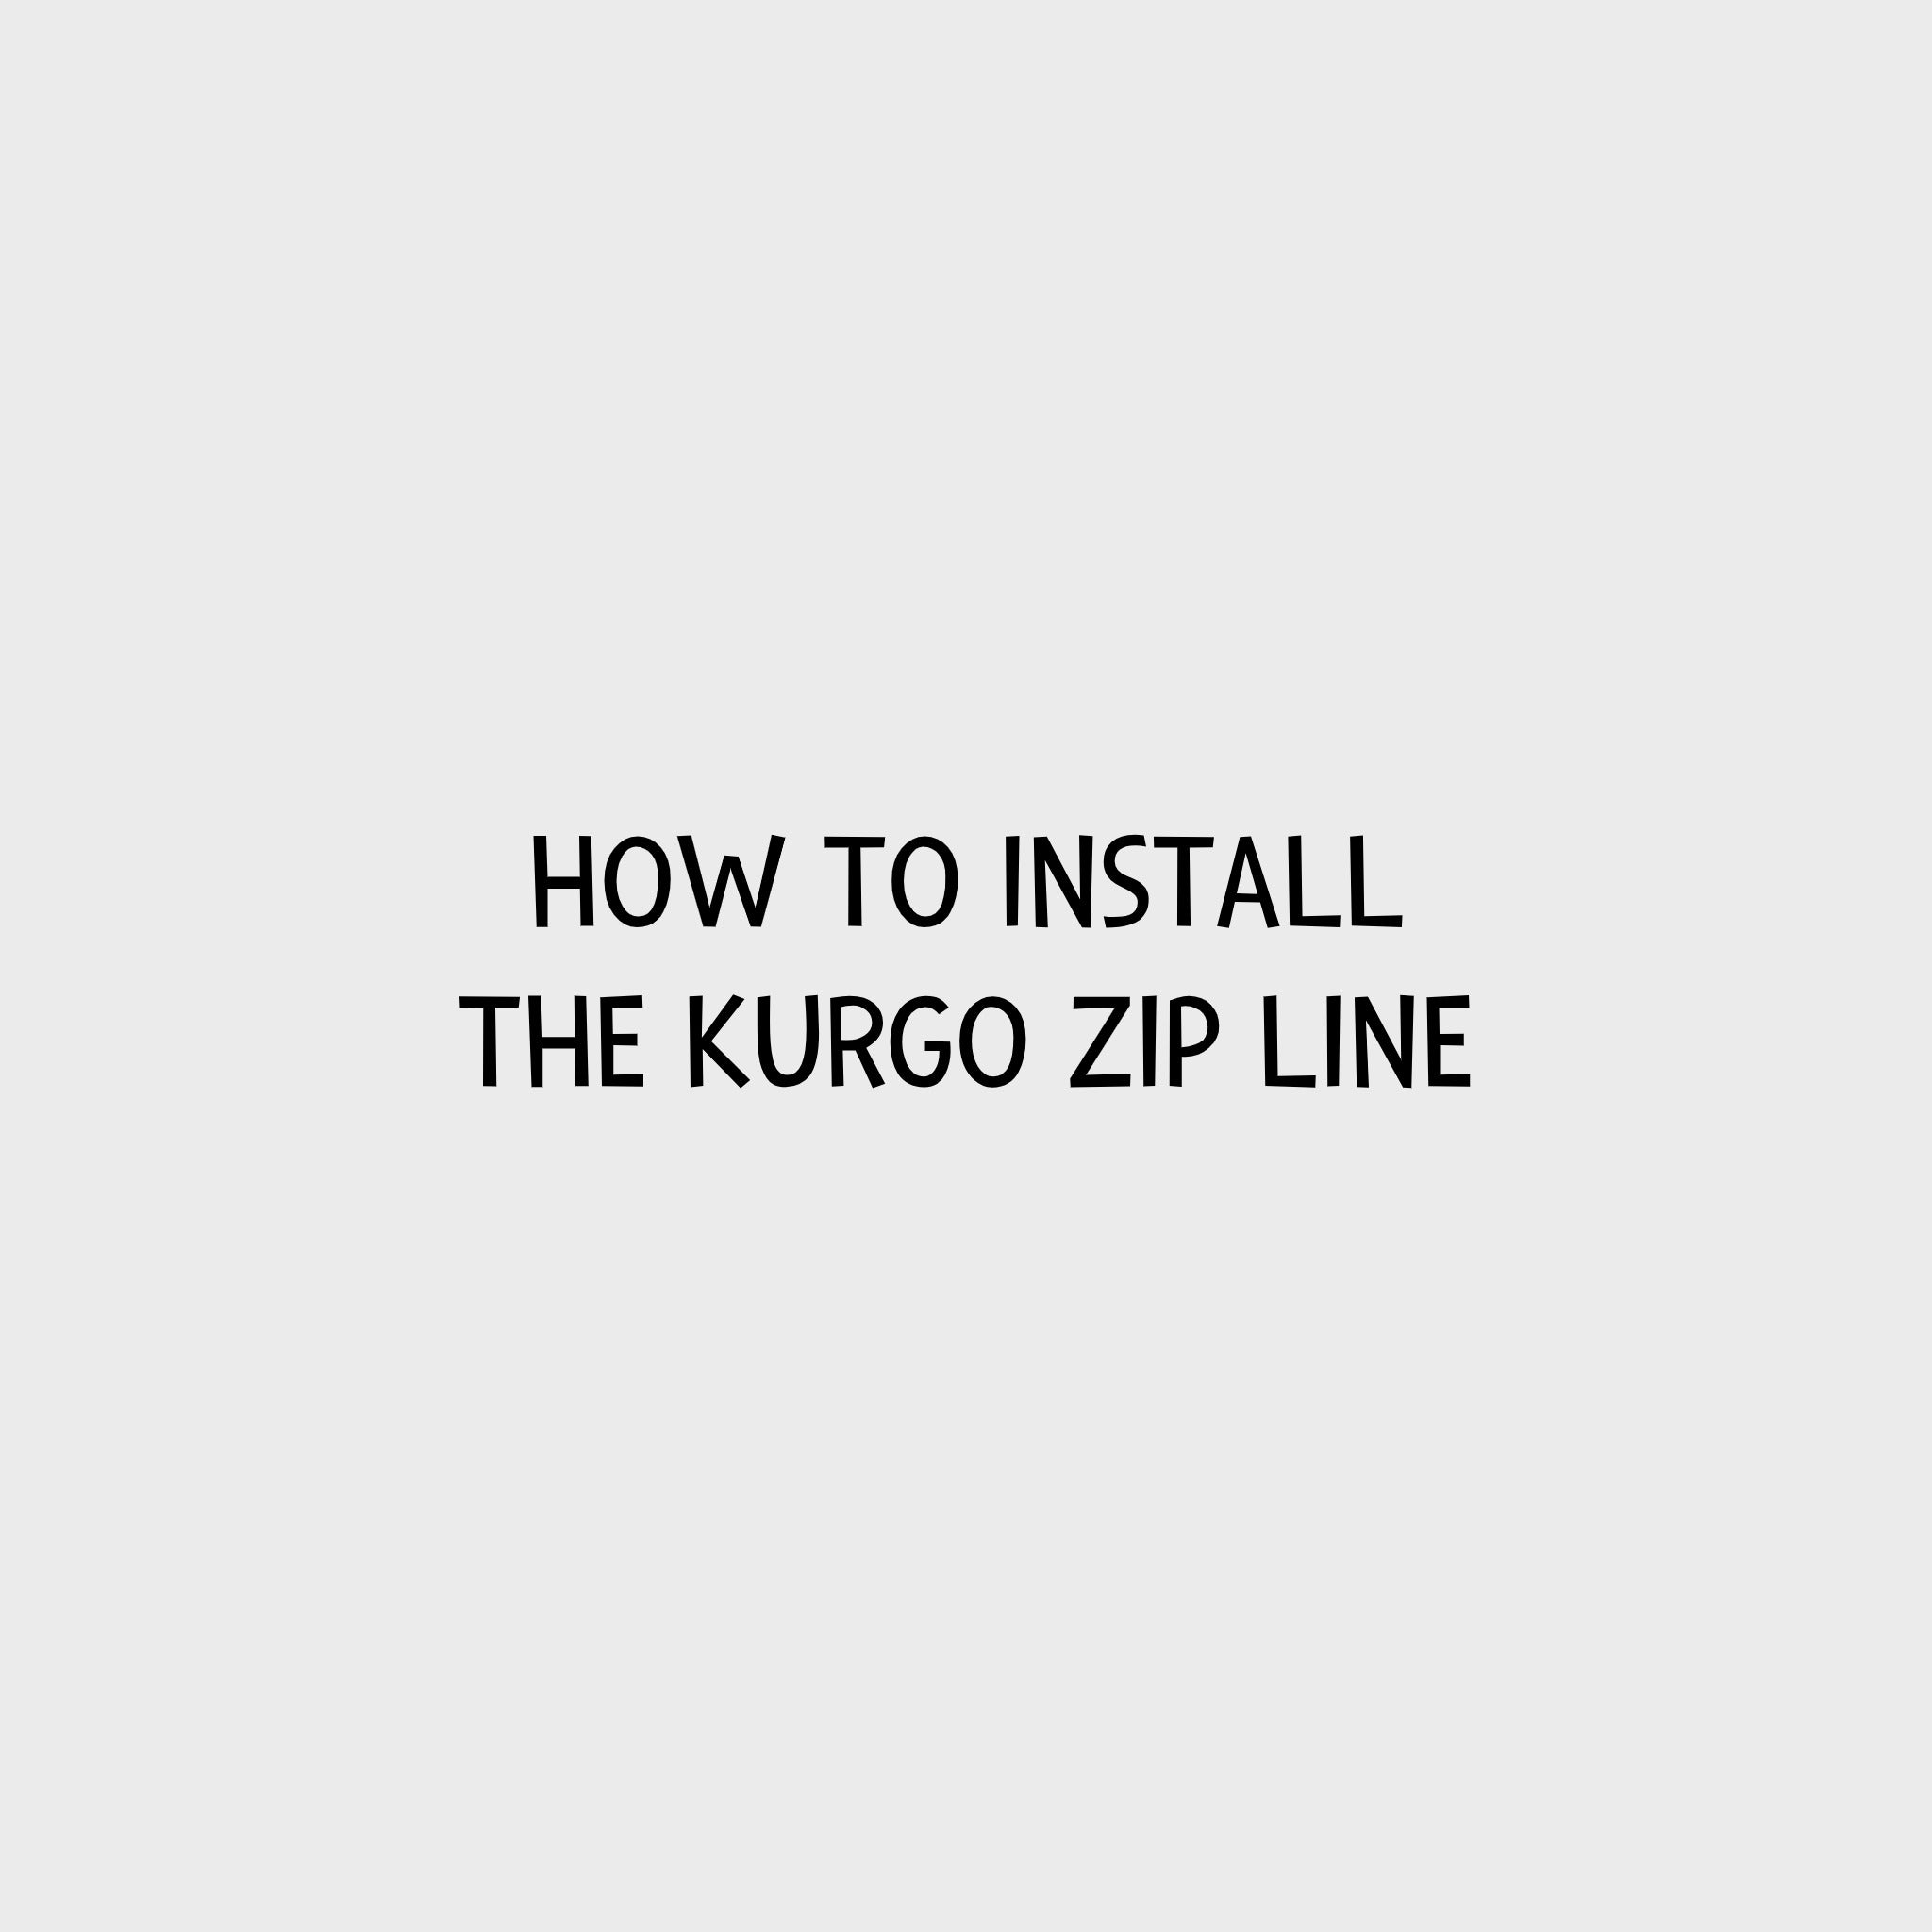 Video - How to install the Kurgo Zip Line